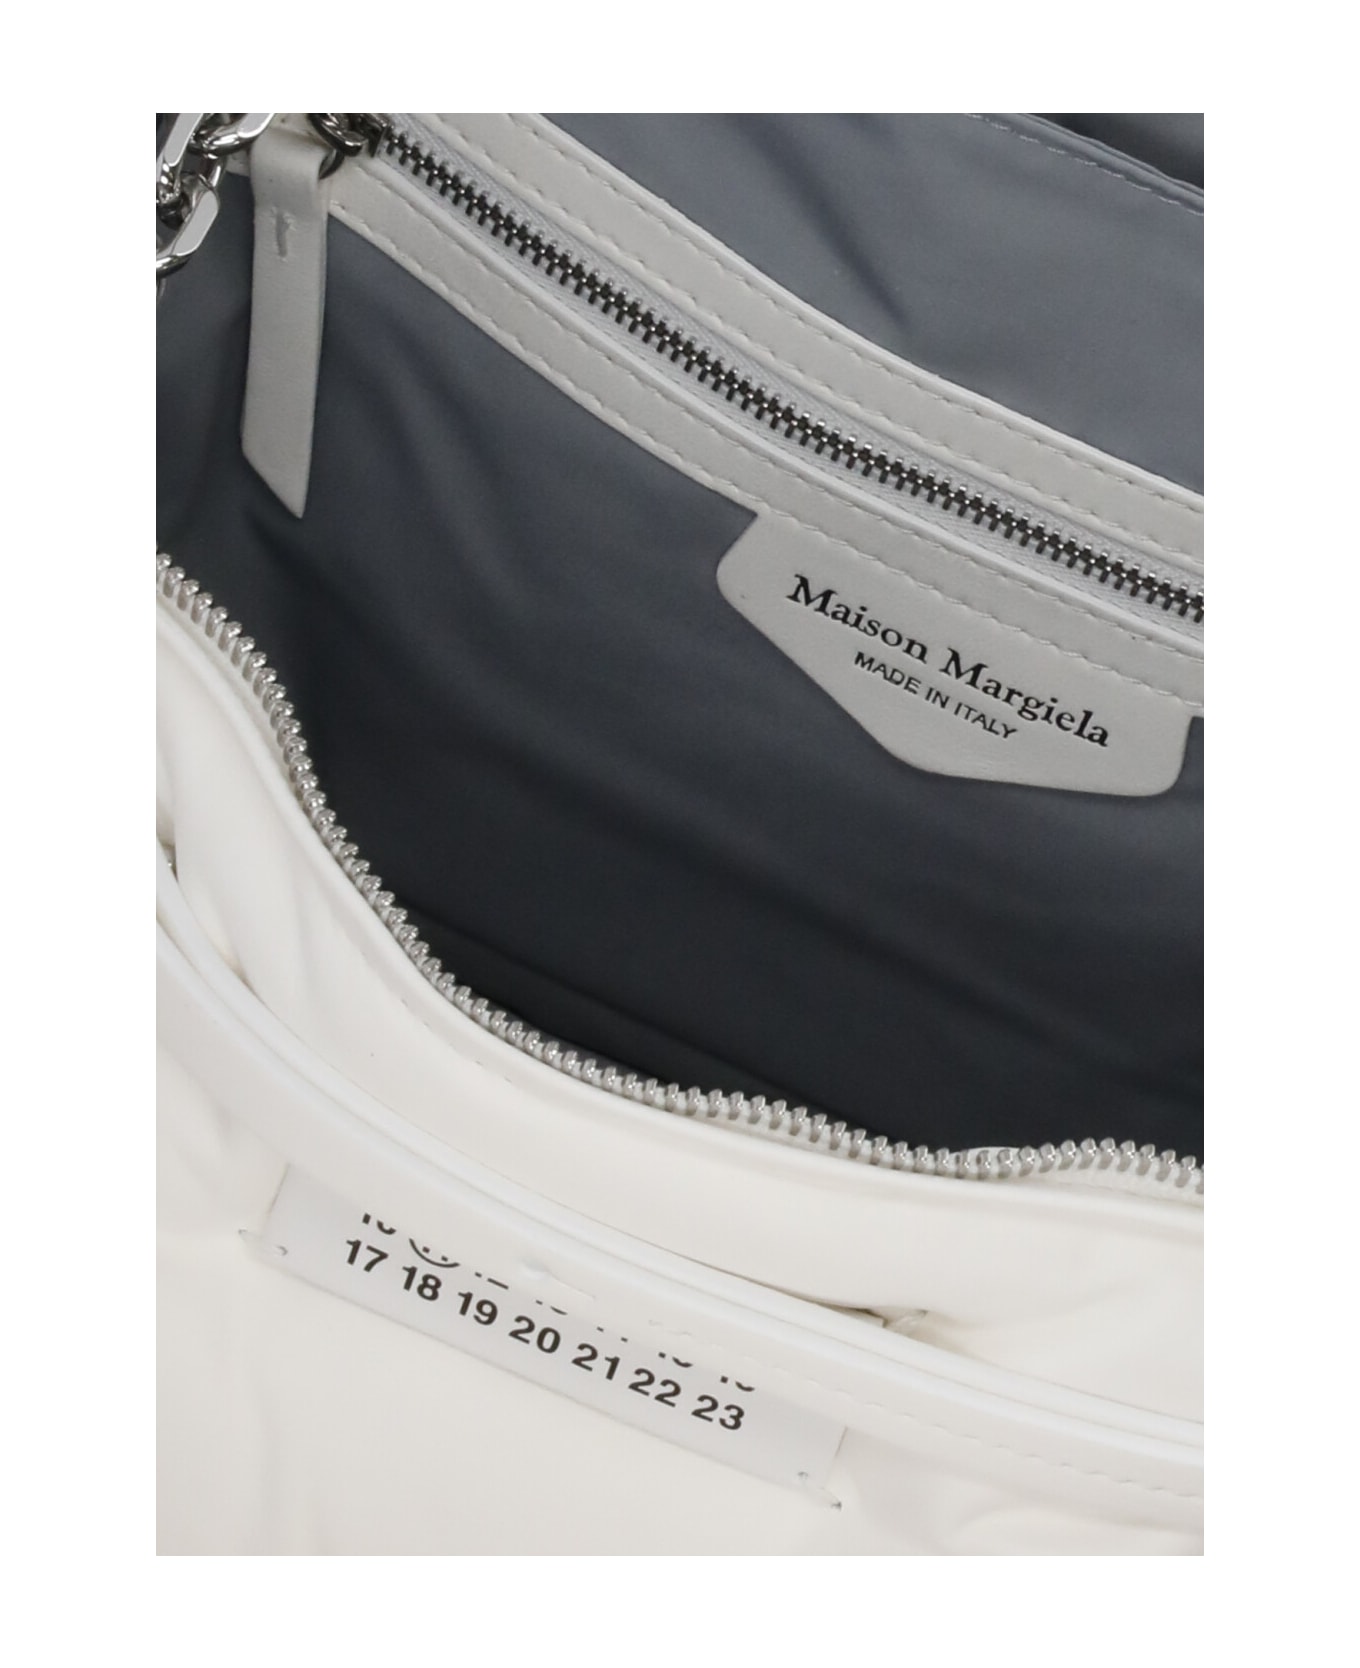 Maison Margiela Glam Slam Shoulder Bag - WHITE